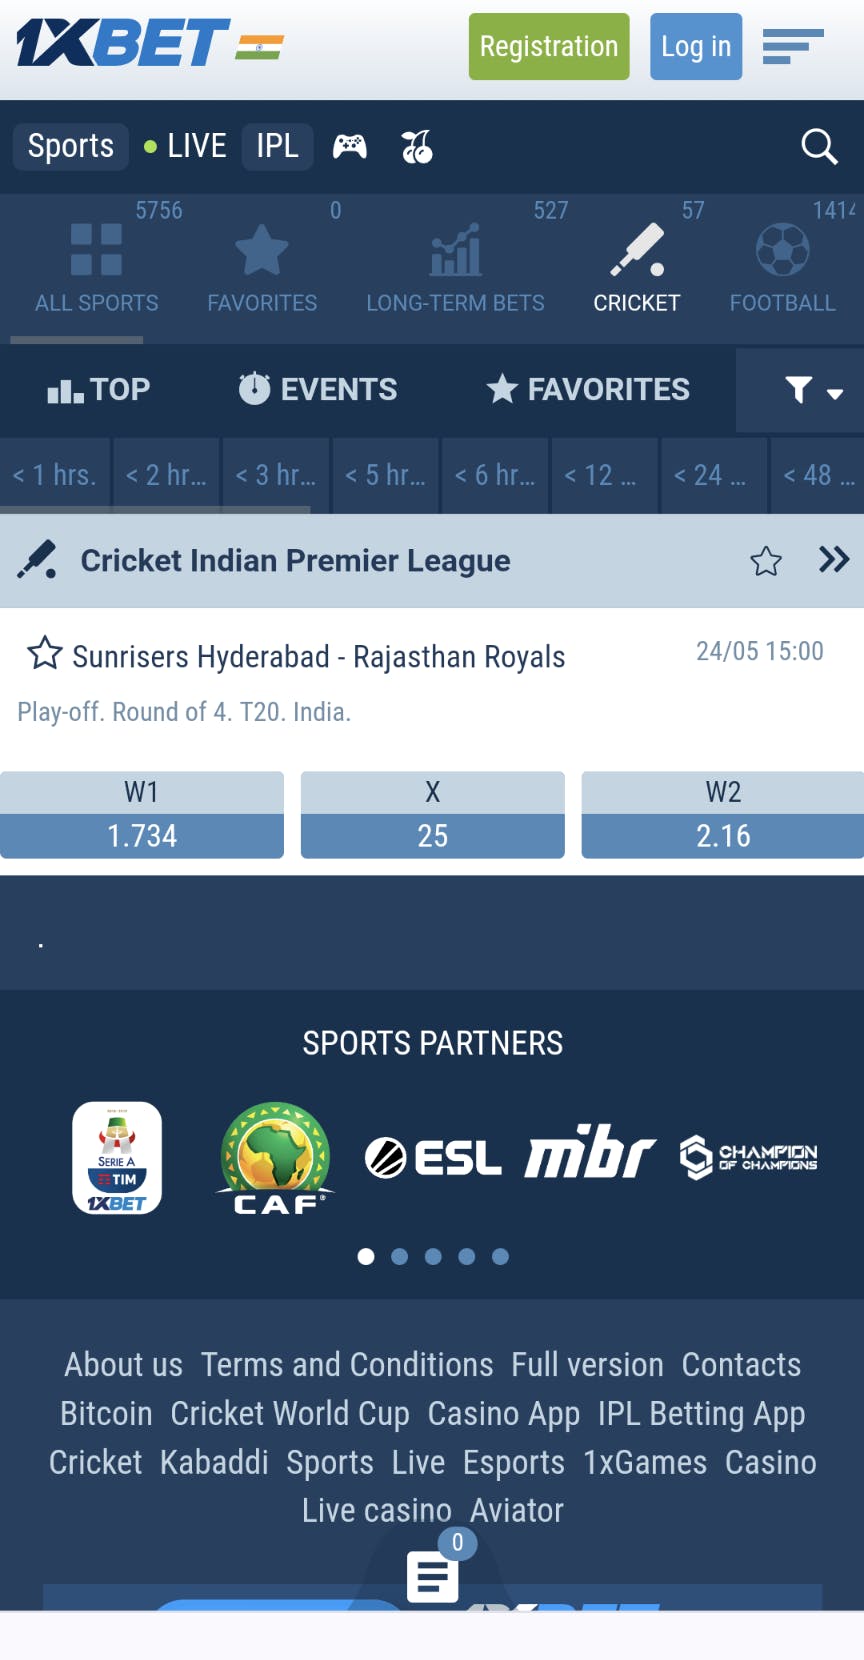 1xBet app live cricket betting.